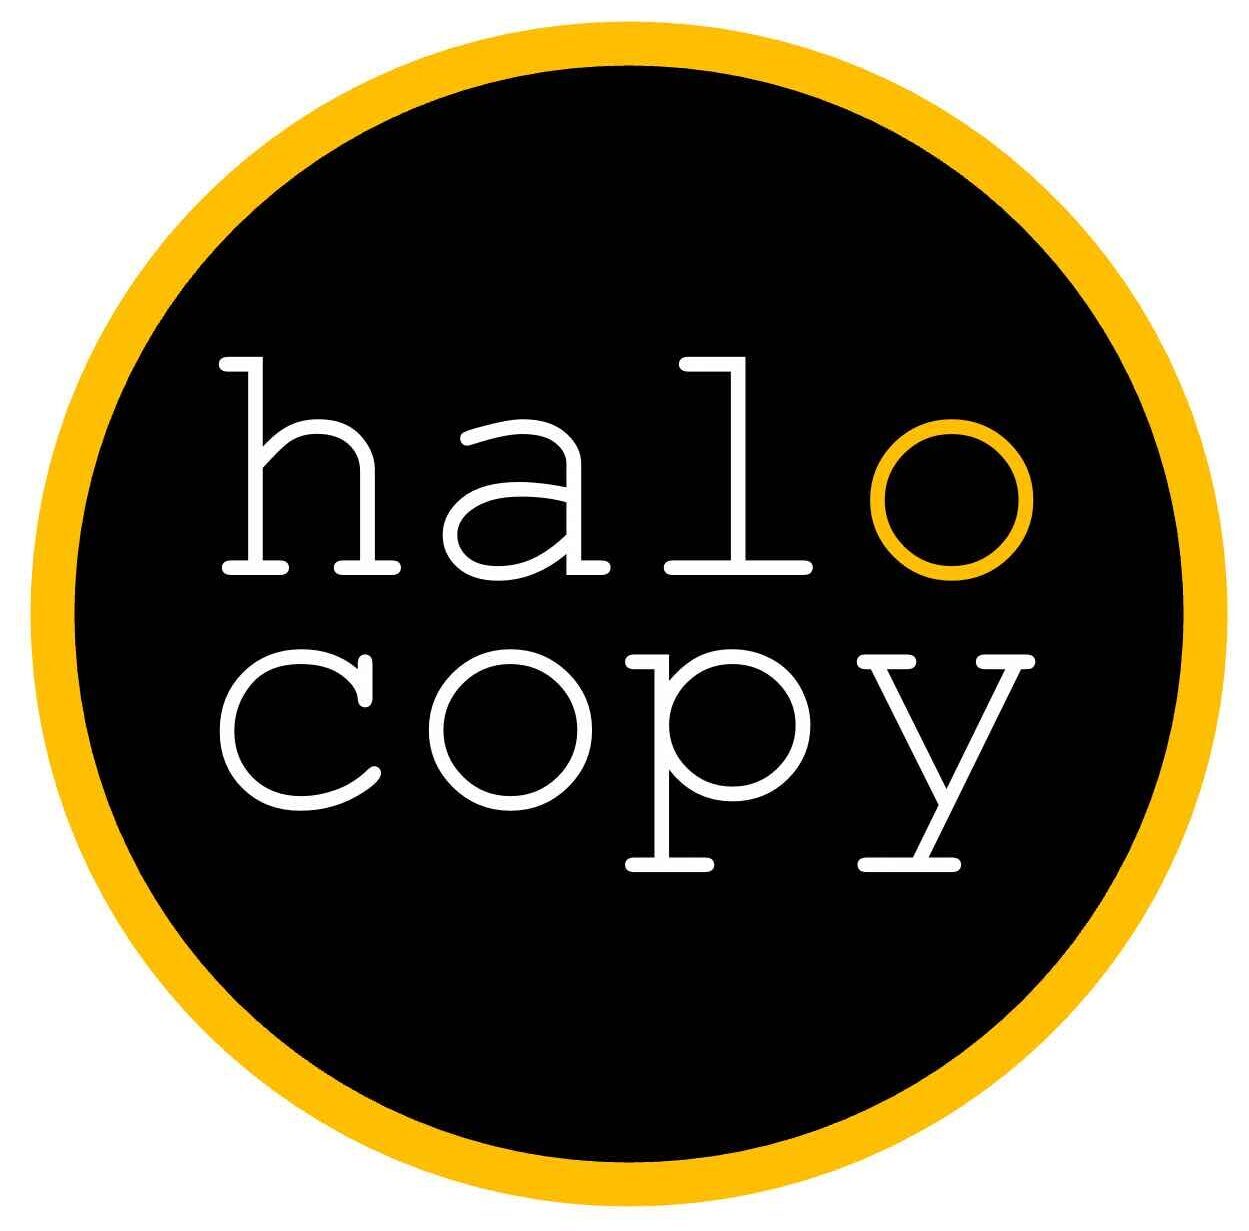 halo copy logo